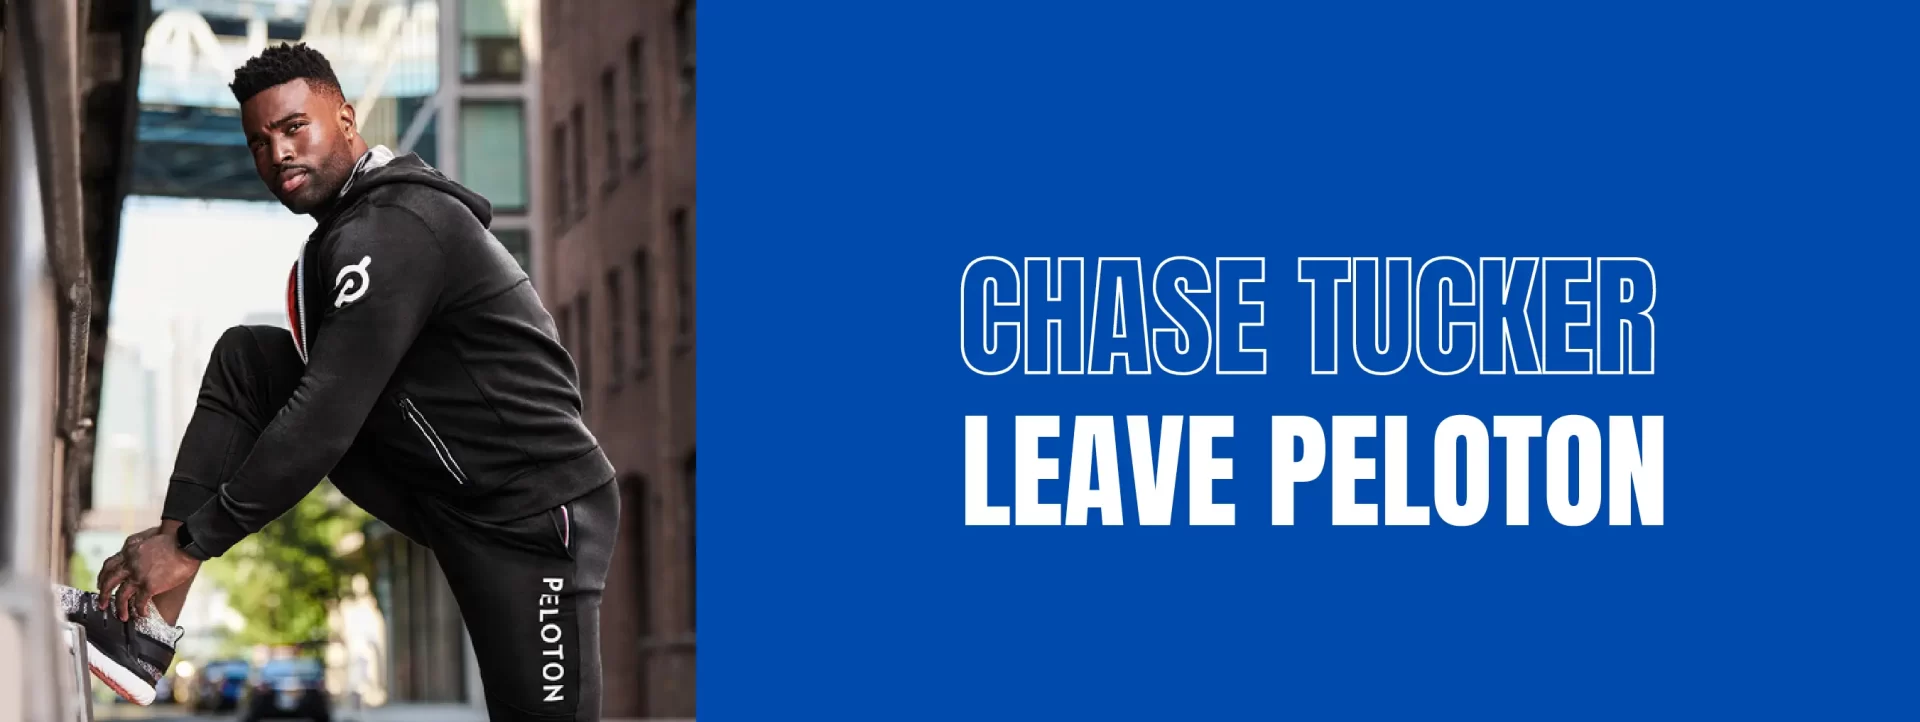 Chase Tucker Leave Peloton